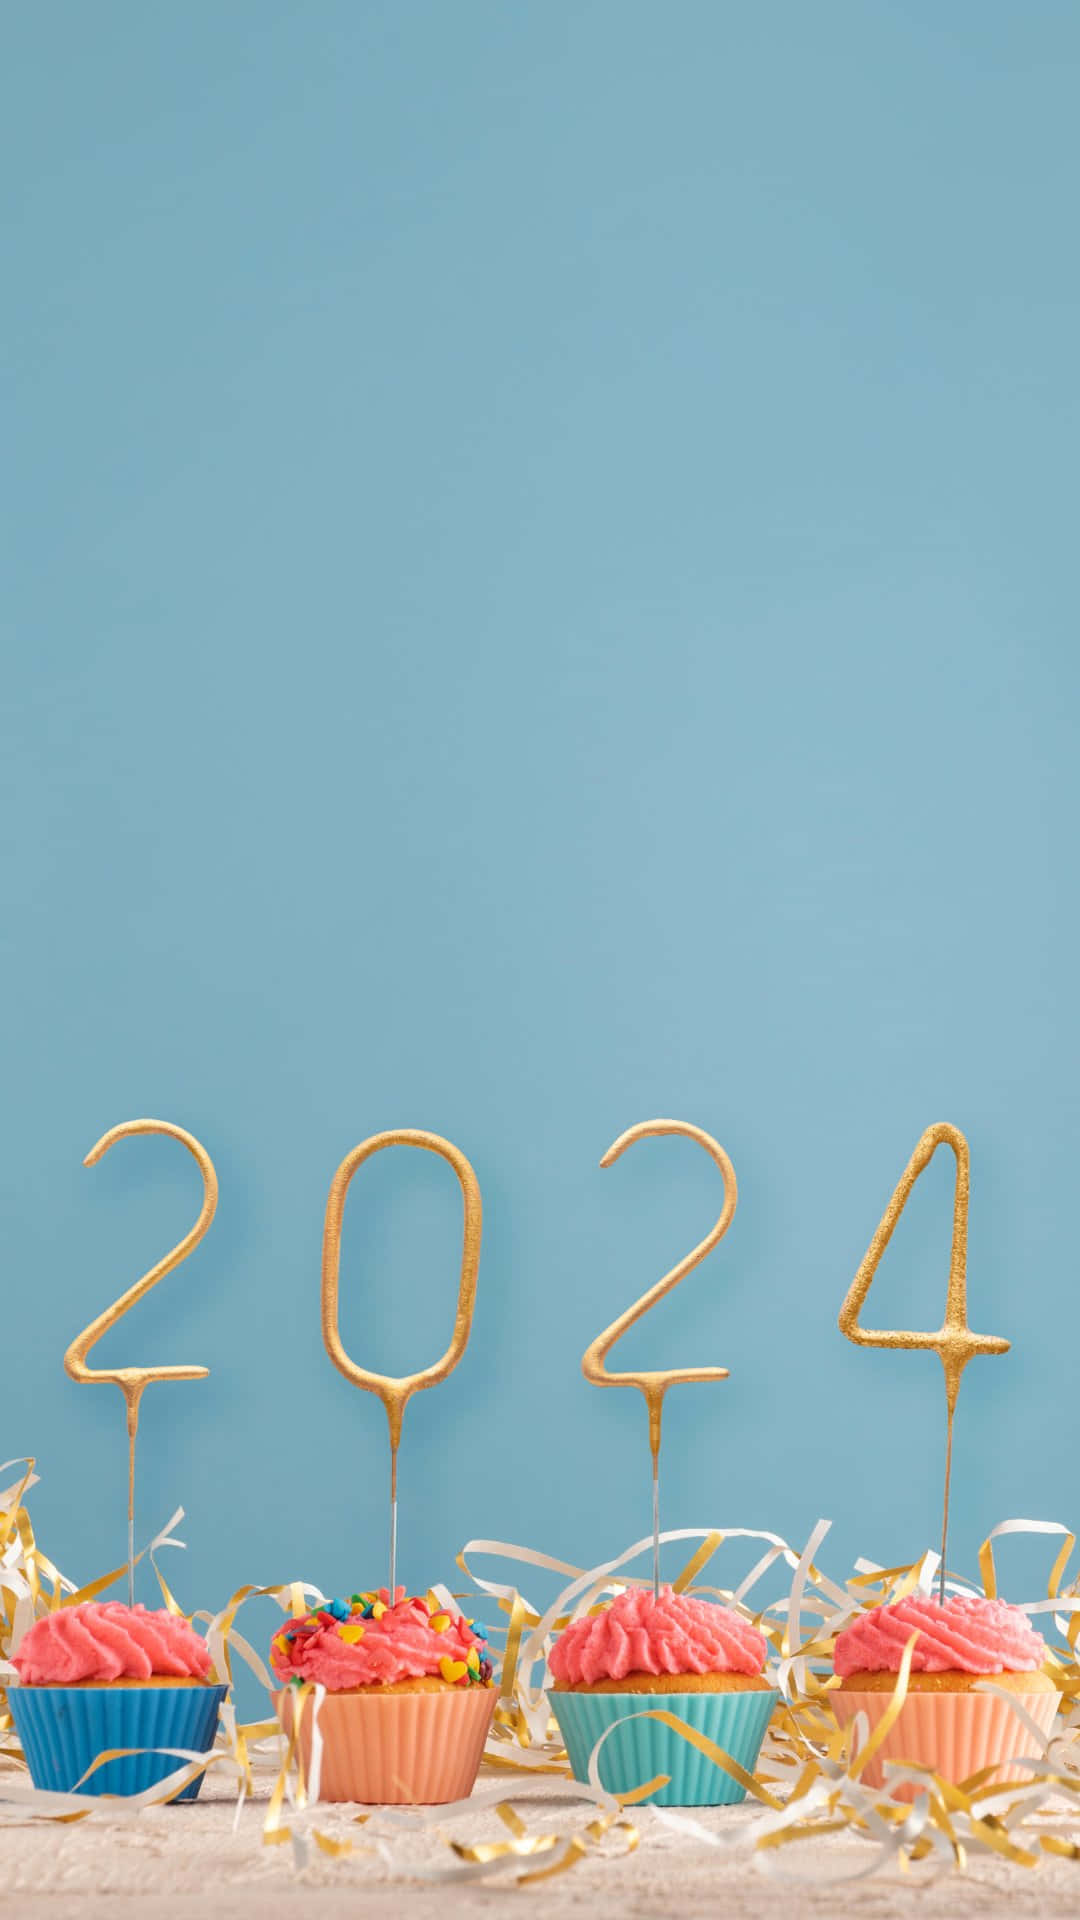 New_ Year_2024_ Cupcakes_ Celebration Wallpaper